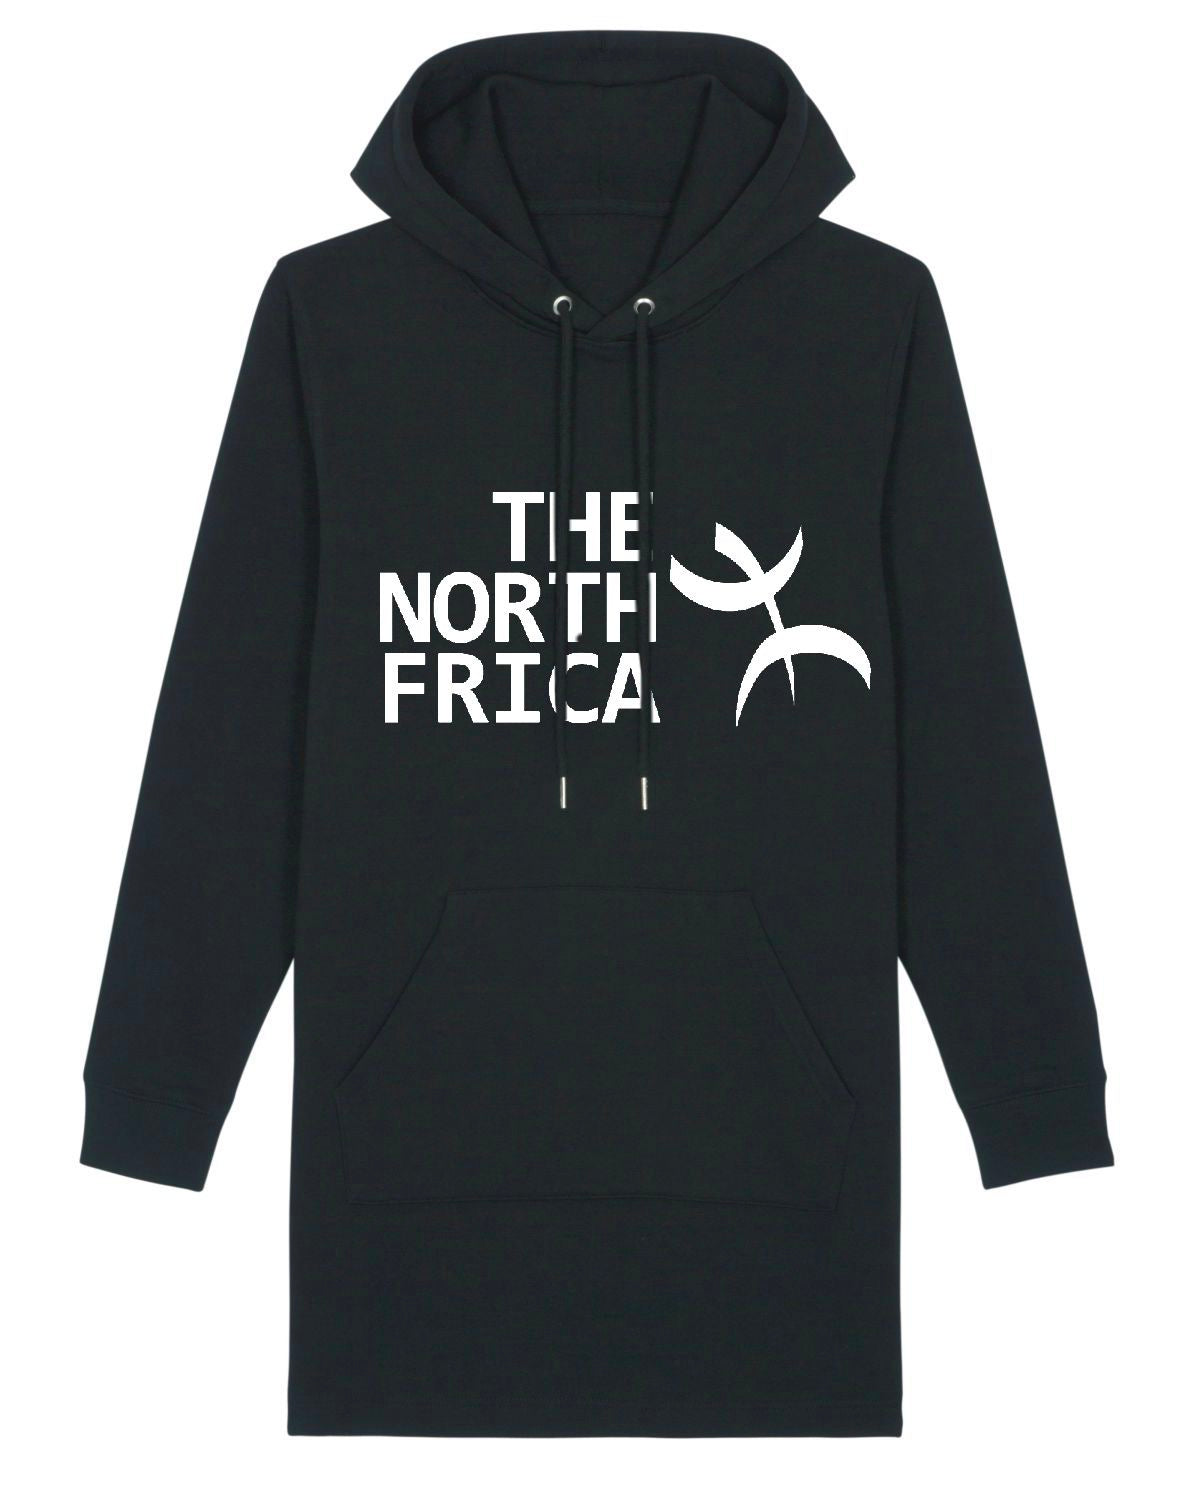 Robe sweat-shirt à capuche "North Frica" - Ghazel Boutique